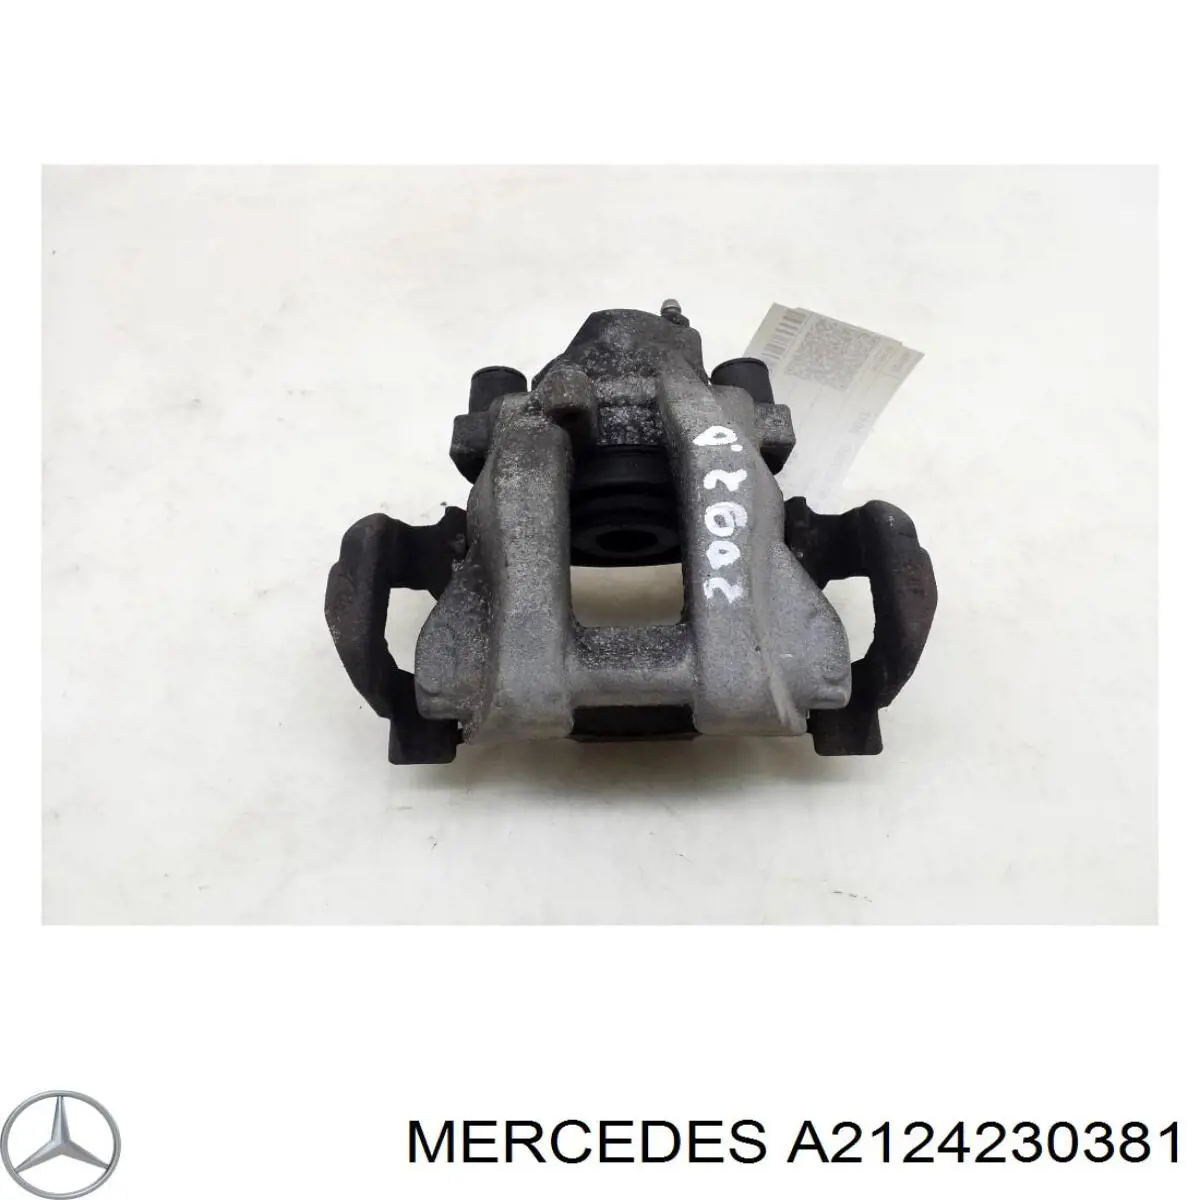 A2124230381 Mercedes суппорт тормозной задний правый